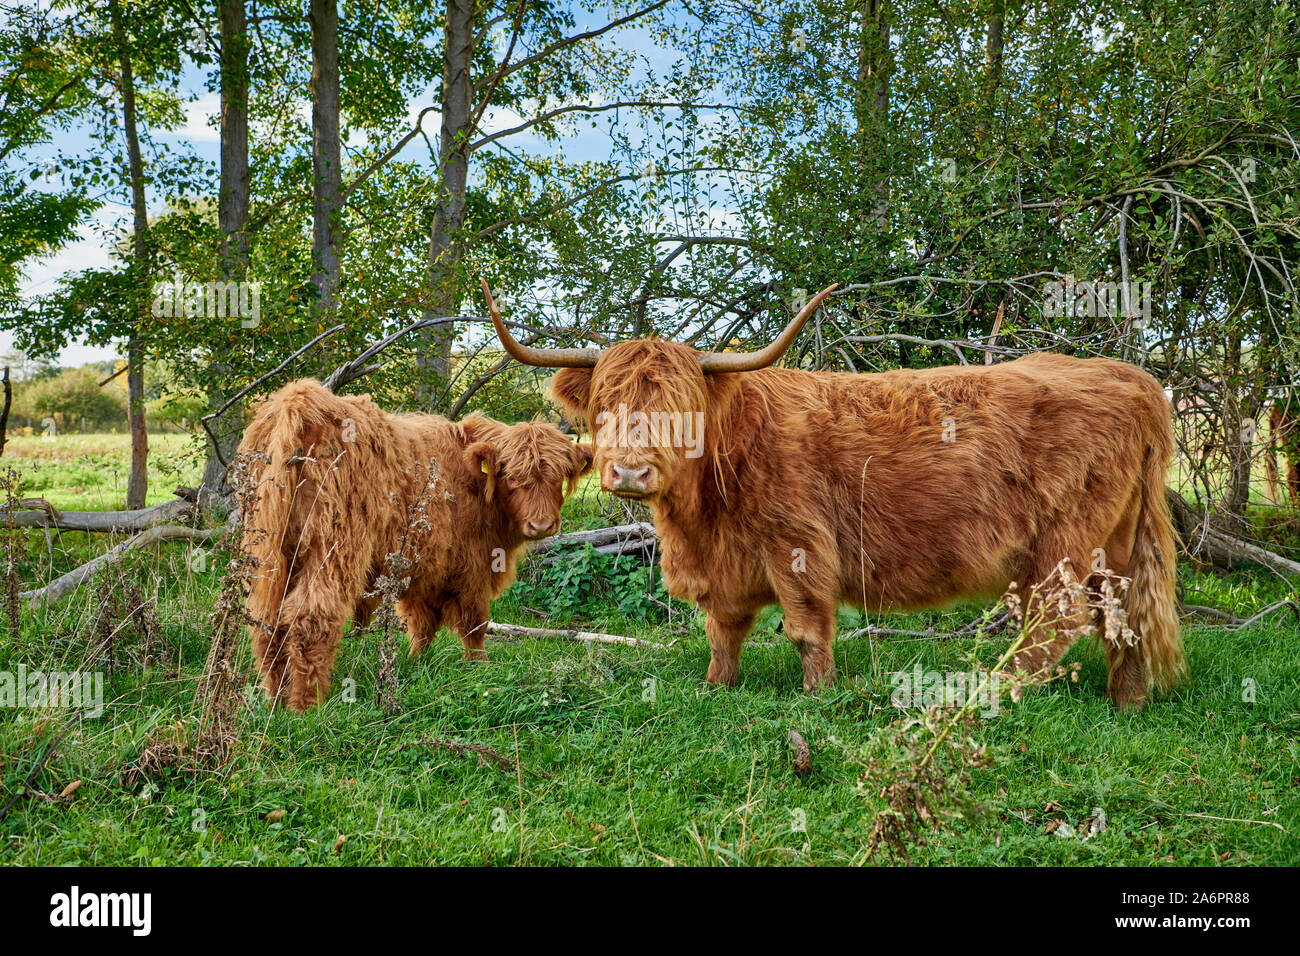 Highland cattle ou Kyloe au pâturage, Waldfeucht, Rhénanie du Nord-Westphalie, Allemagne Banque D'Images